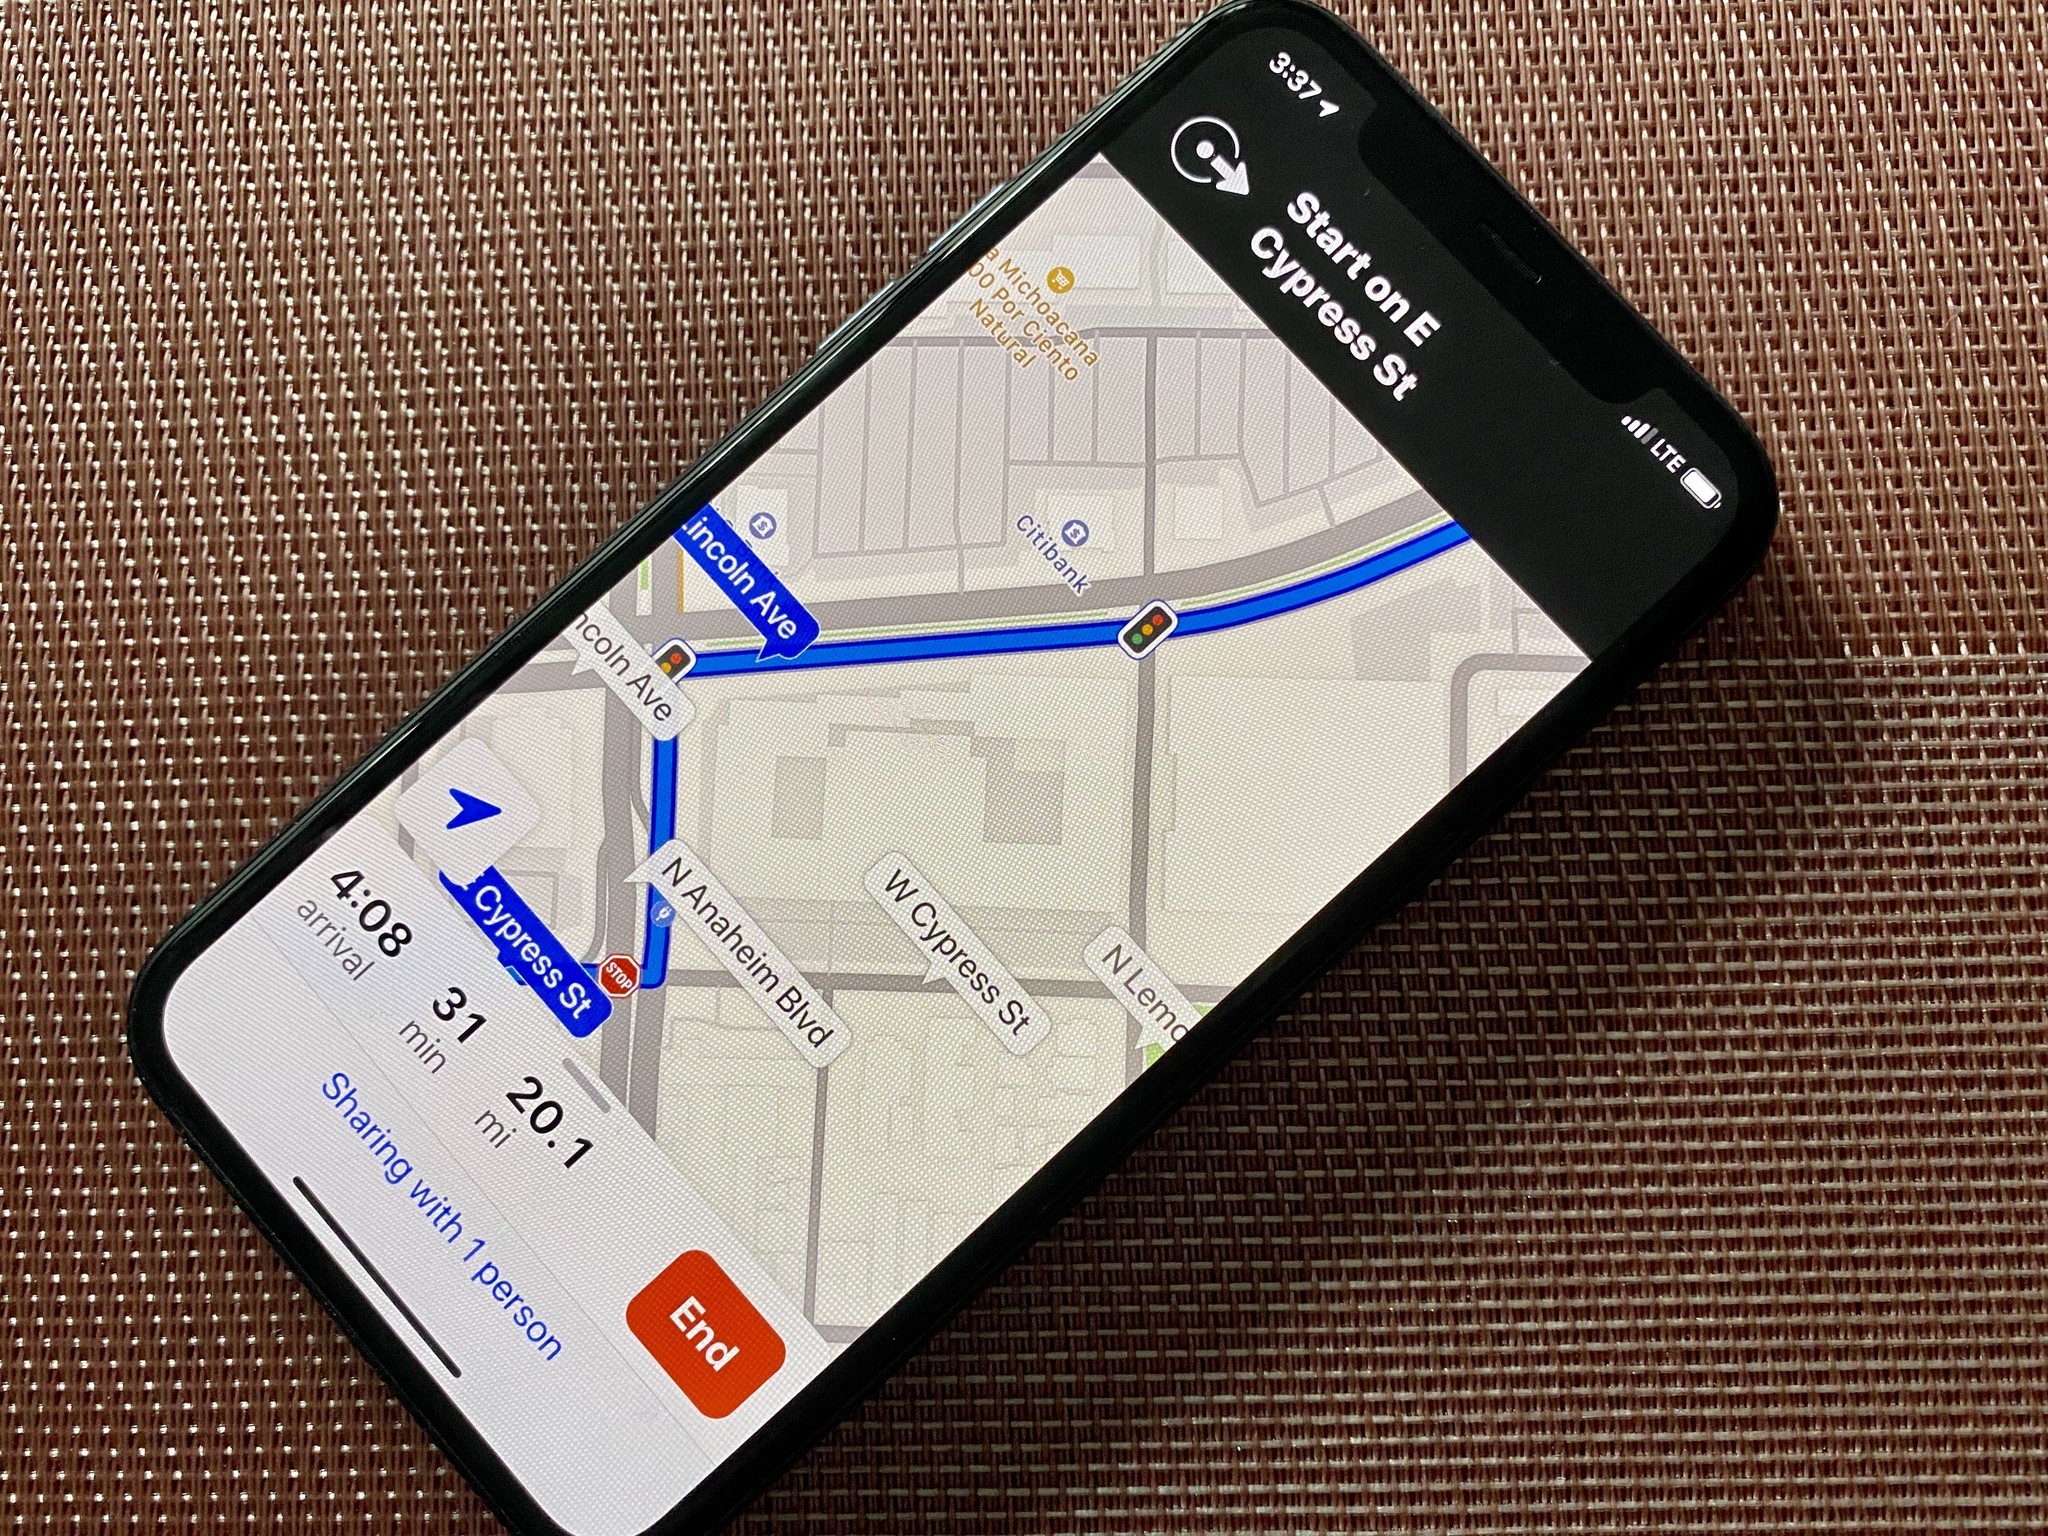 iPhone 11 Pro with Maps sharing live ETA